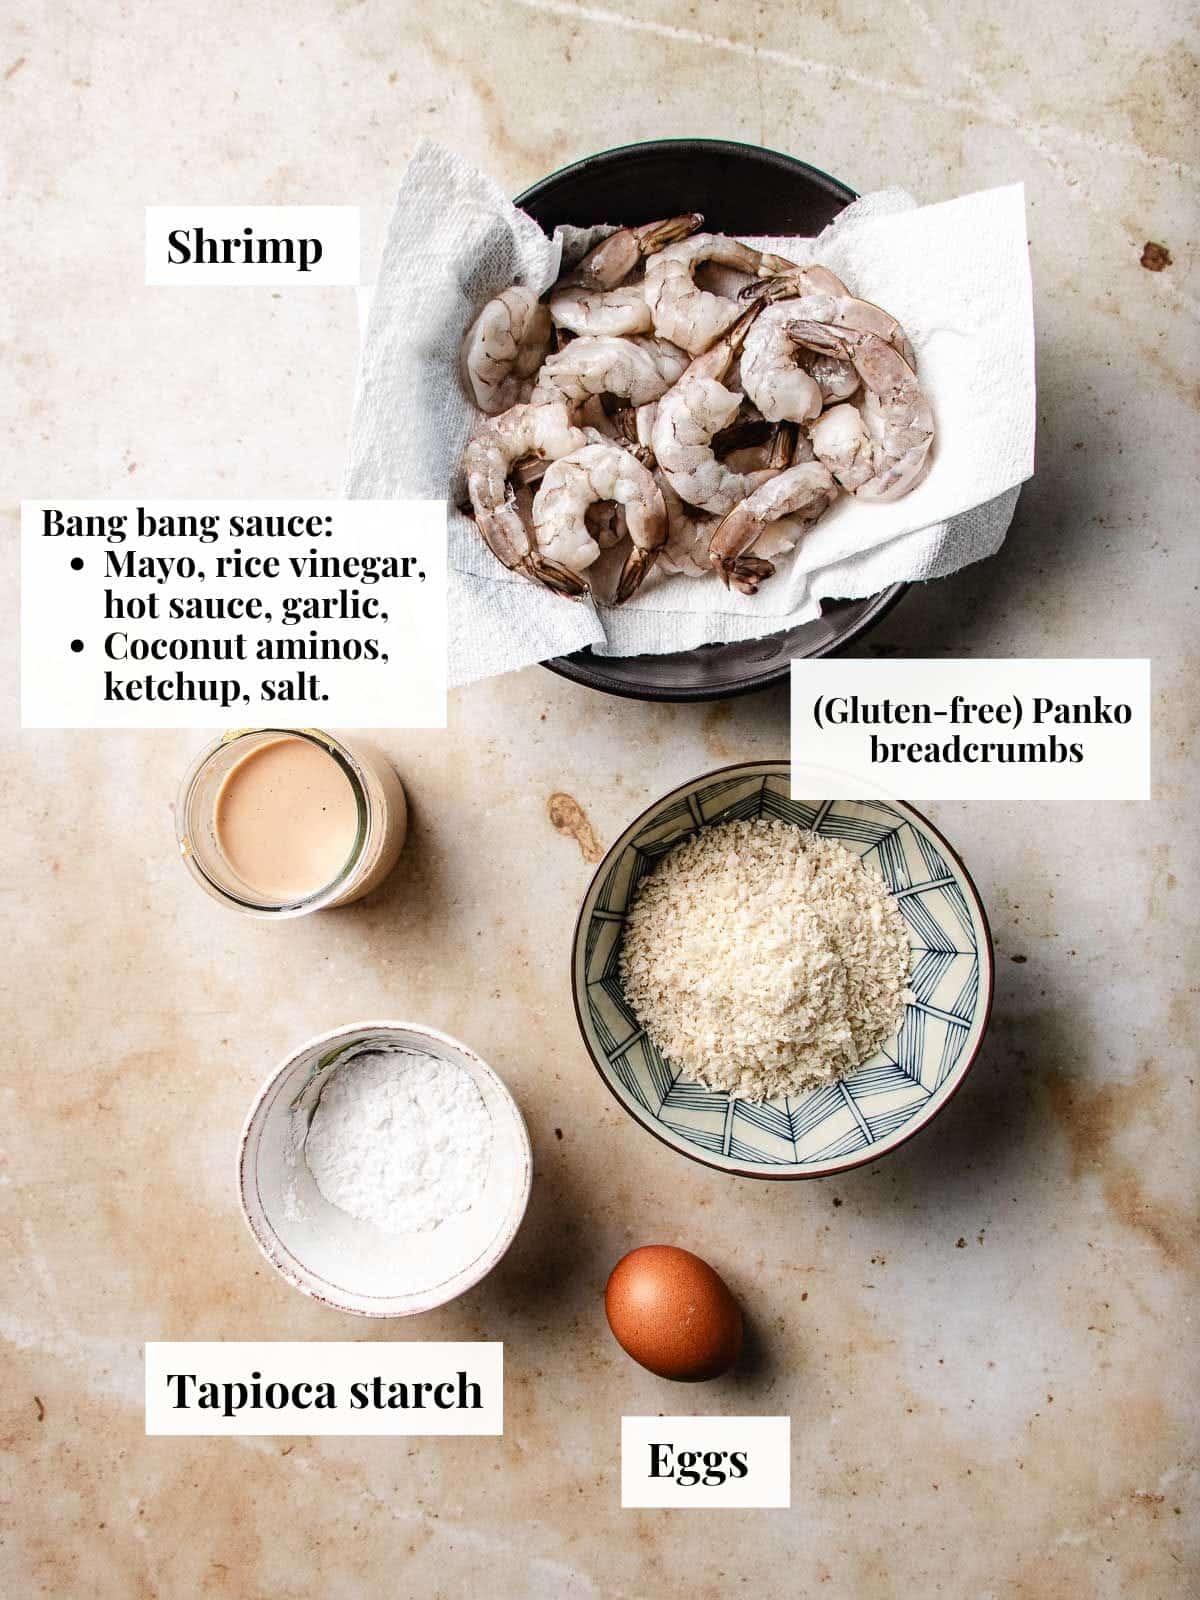 Image shows ingredients for making bang bang shrimp.